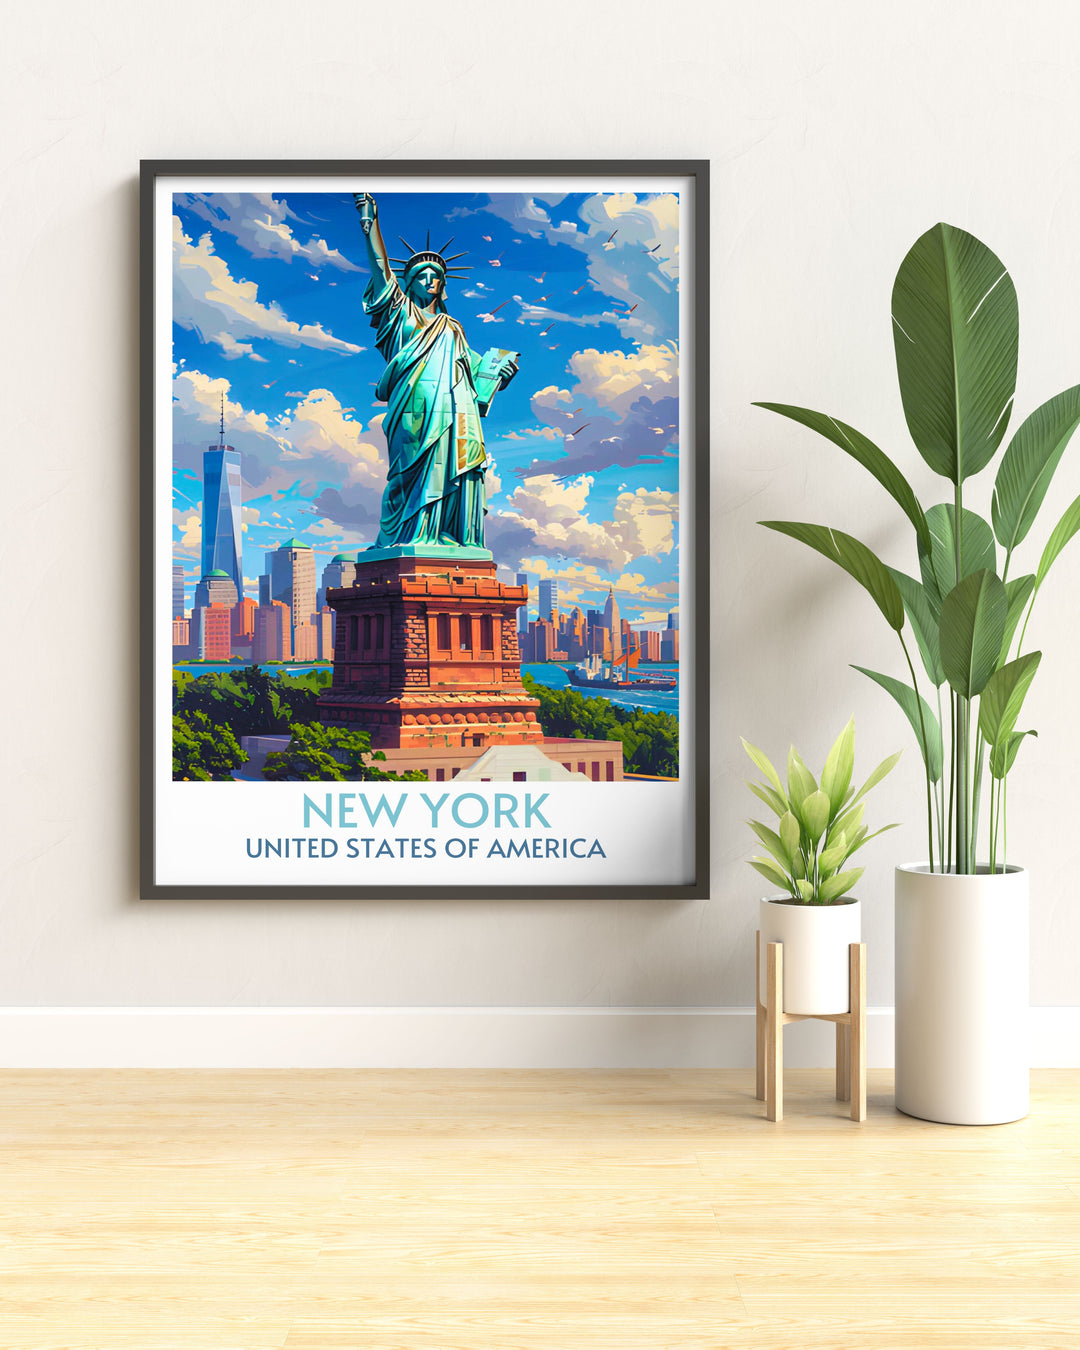 Retro travel print of the Statue of Liberty, a nostalgic take on New Yorks famous landmark.